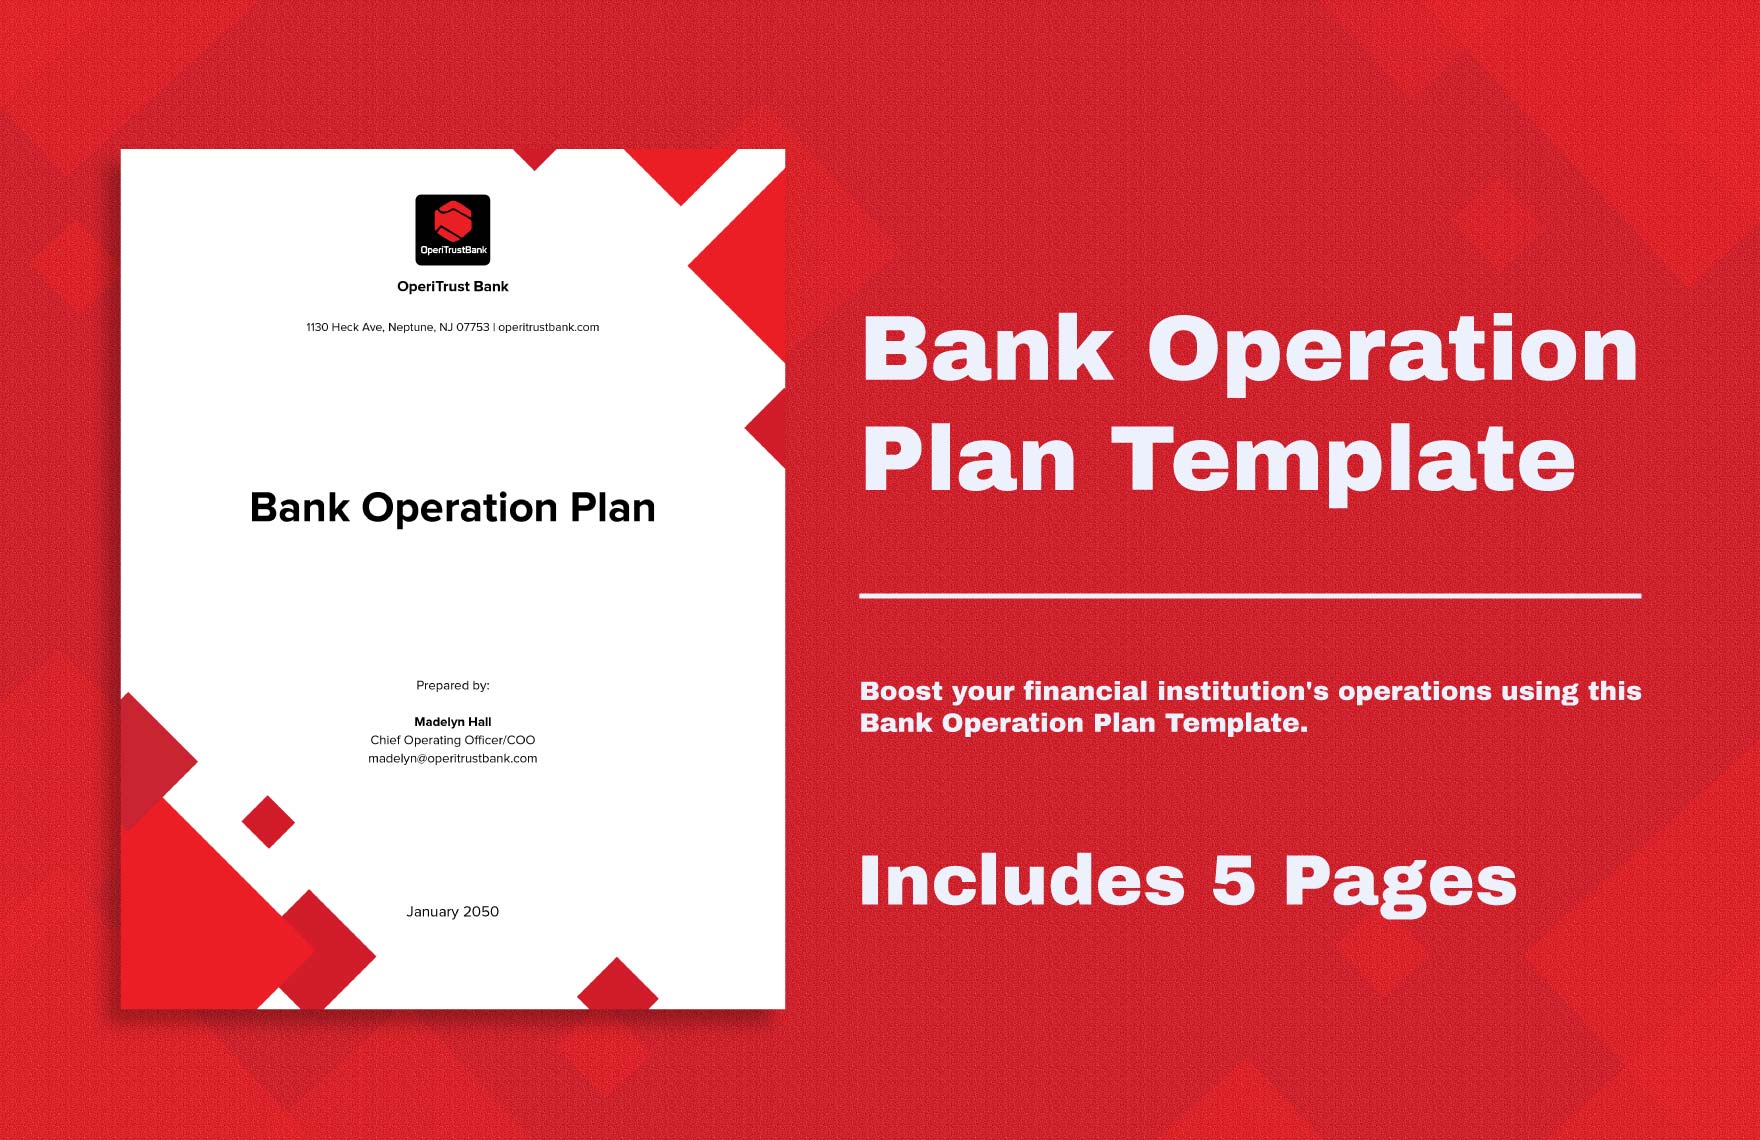  Bank Operation Plan Template